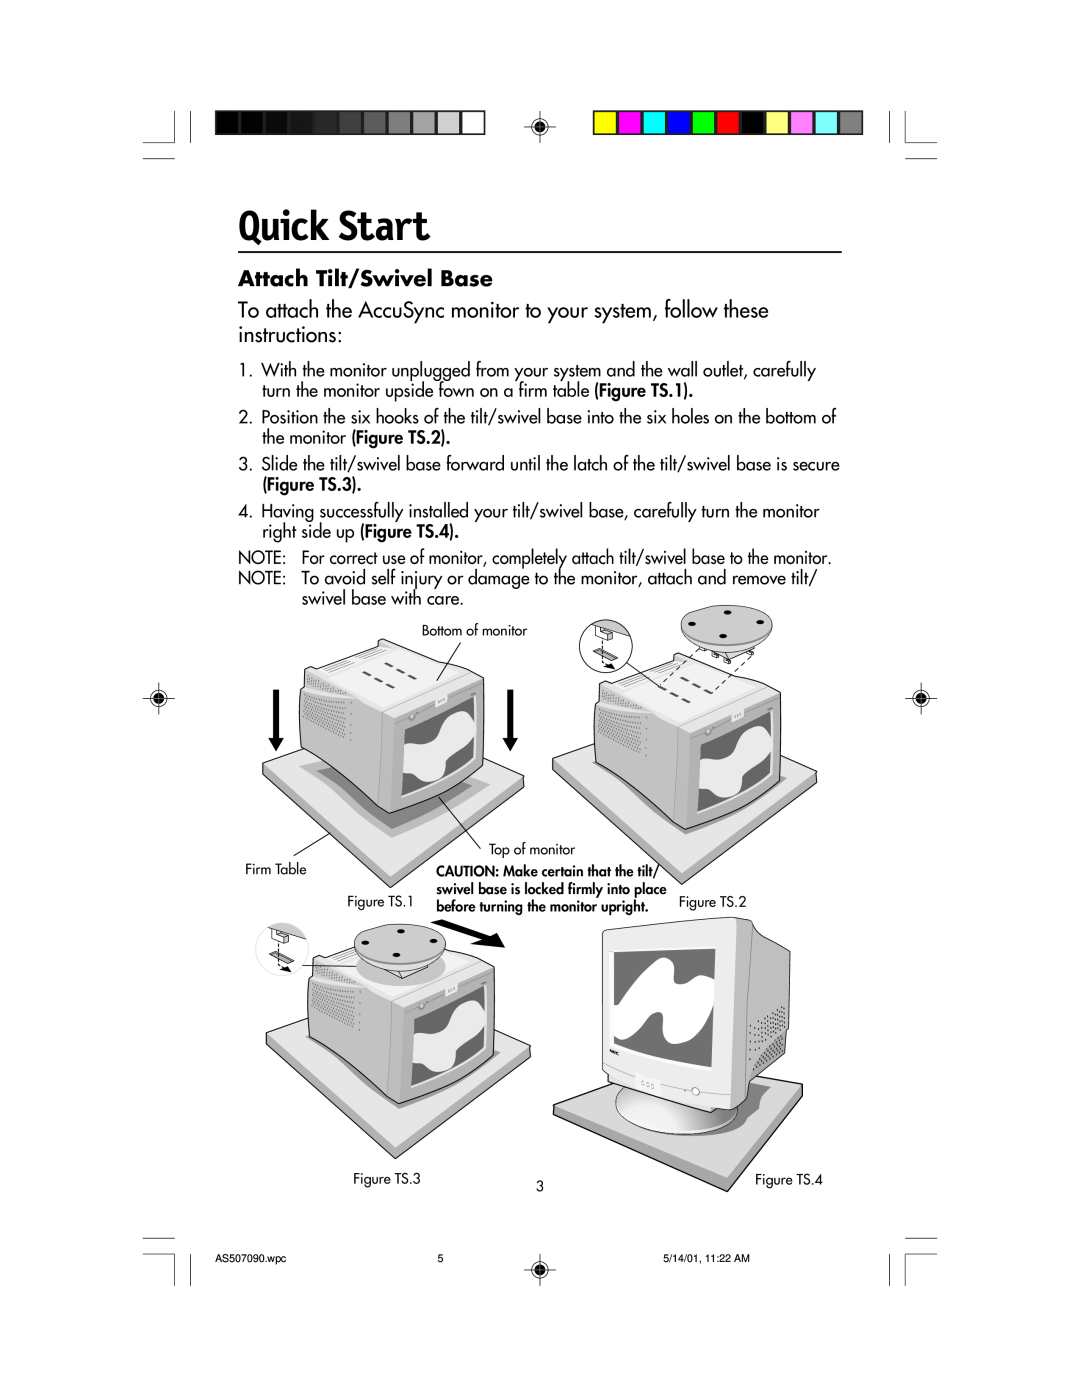 NEC AccuSync 50, AccuSync 90, AccuSync 70 user manual Quick Start, Attach Tilt/Swivel Base 